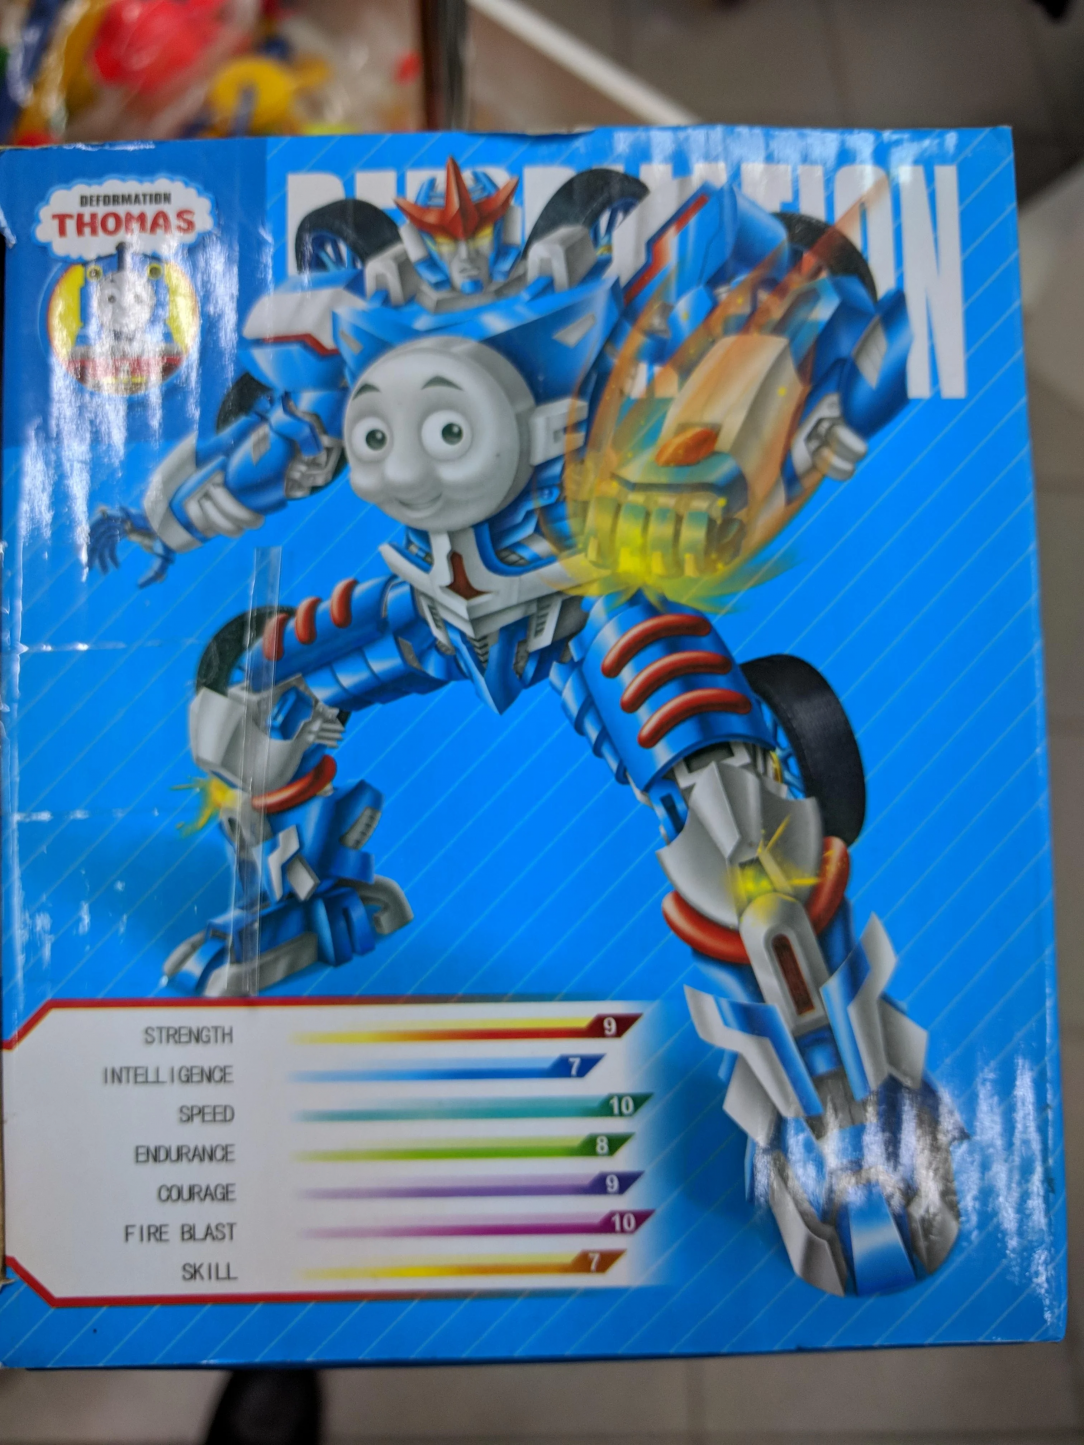 Thomas the Autobot, defender of rails